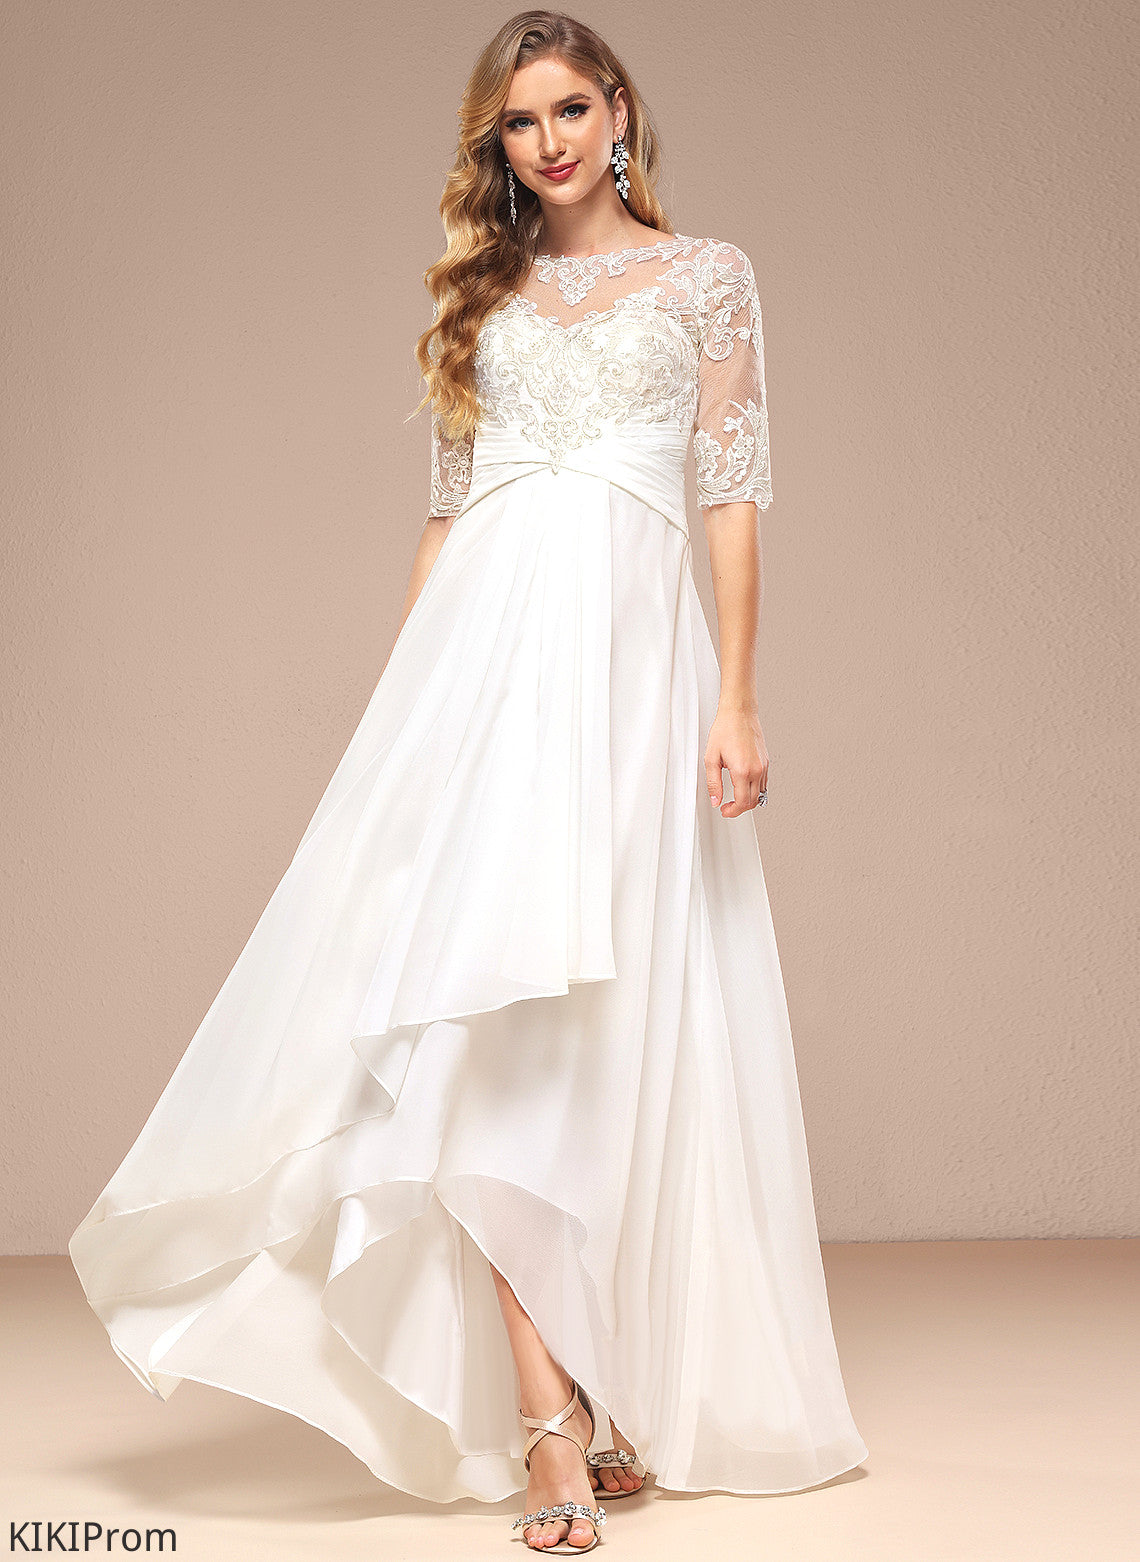 Lace Neck Isabelle Dress Asymmetrical A-Line Wedding Wedding Dresses Boat Chiffon